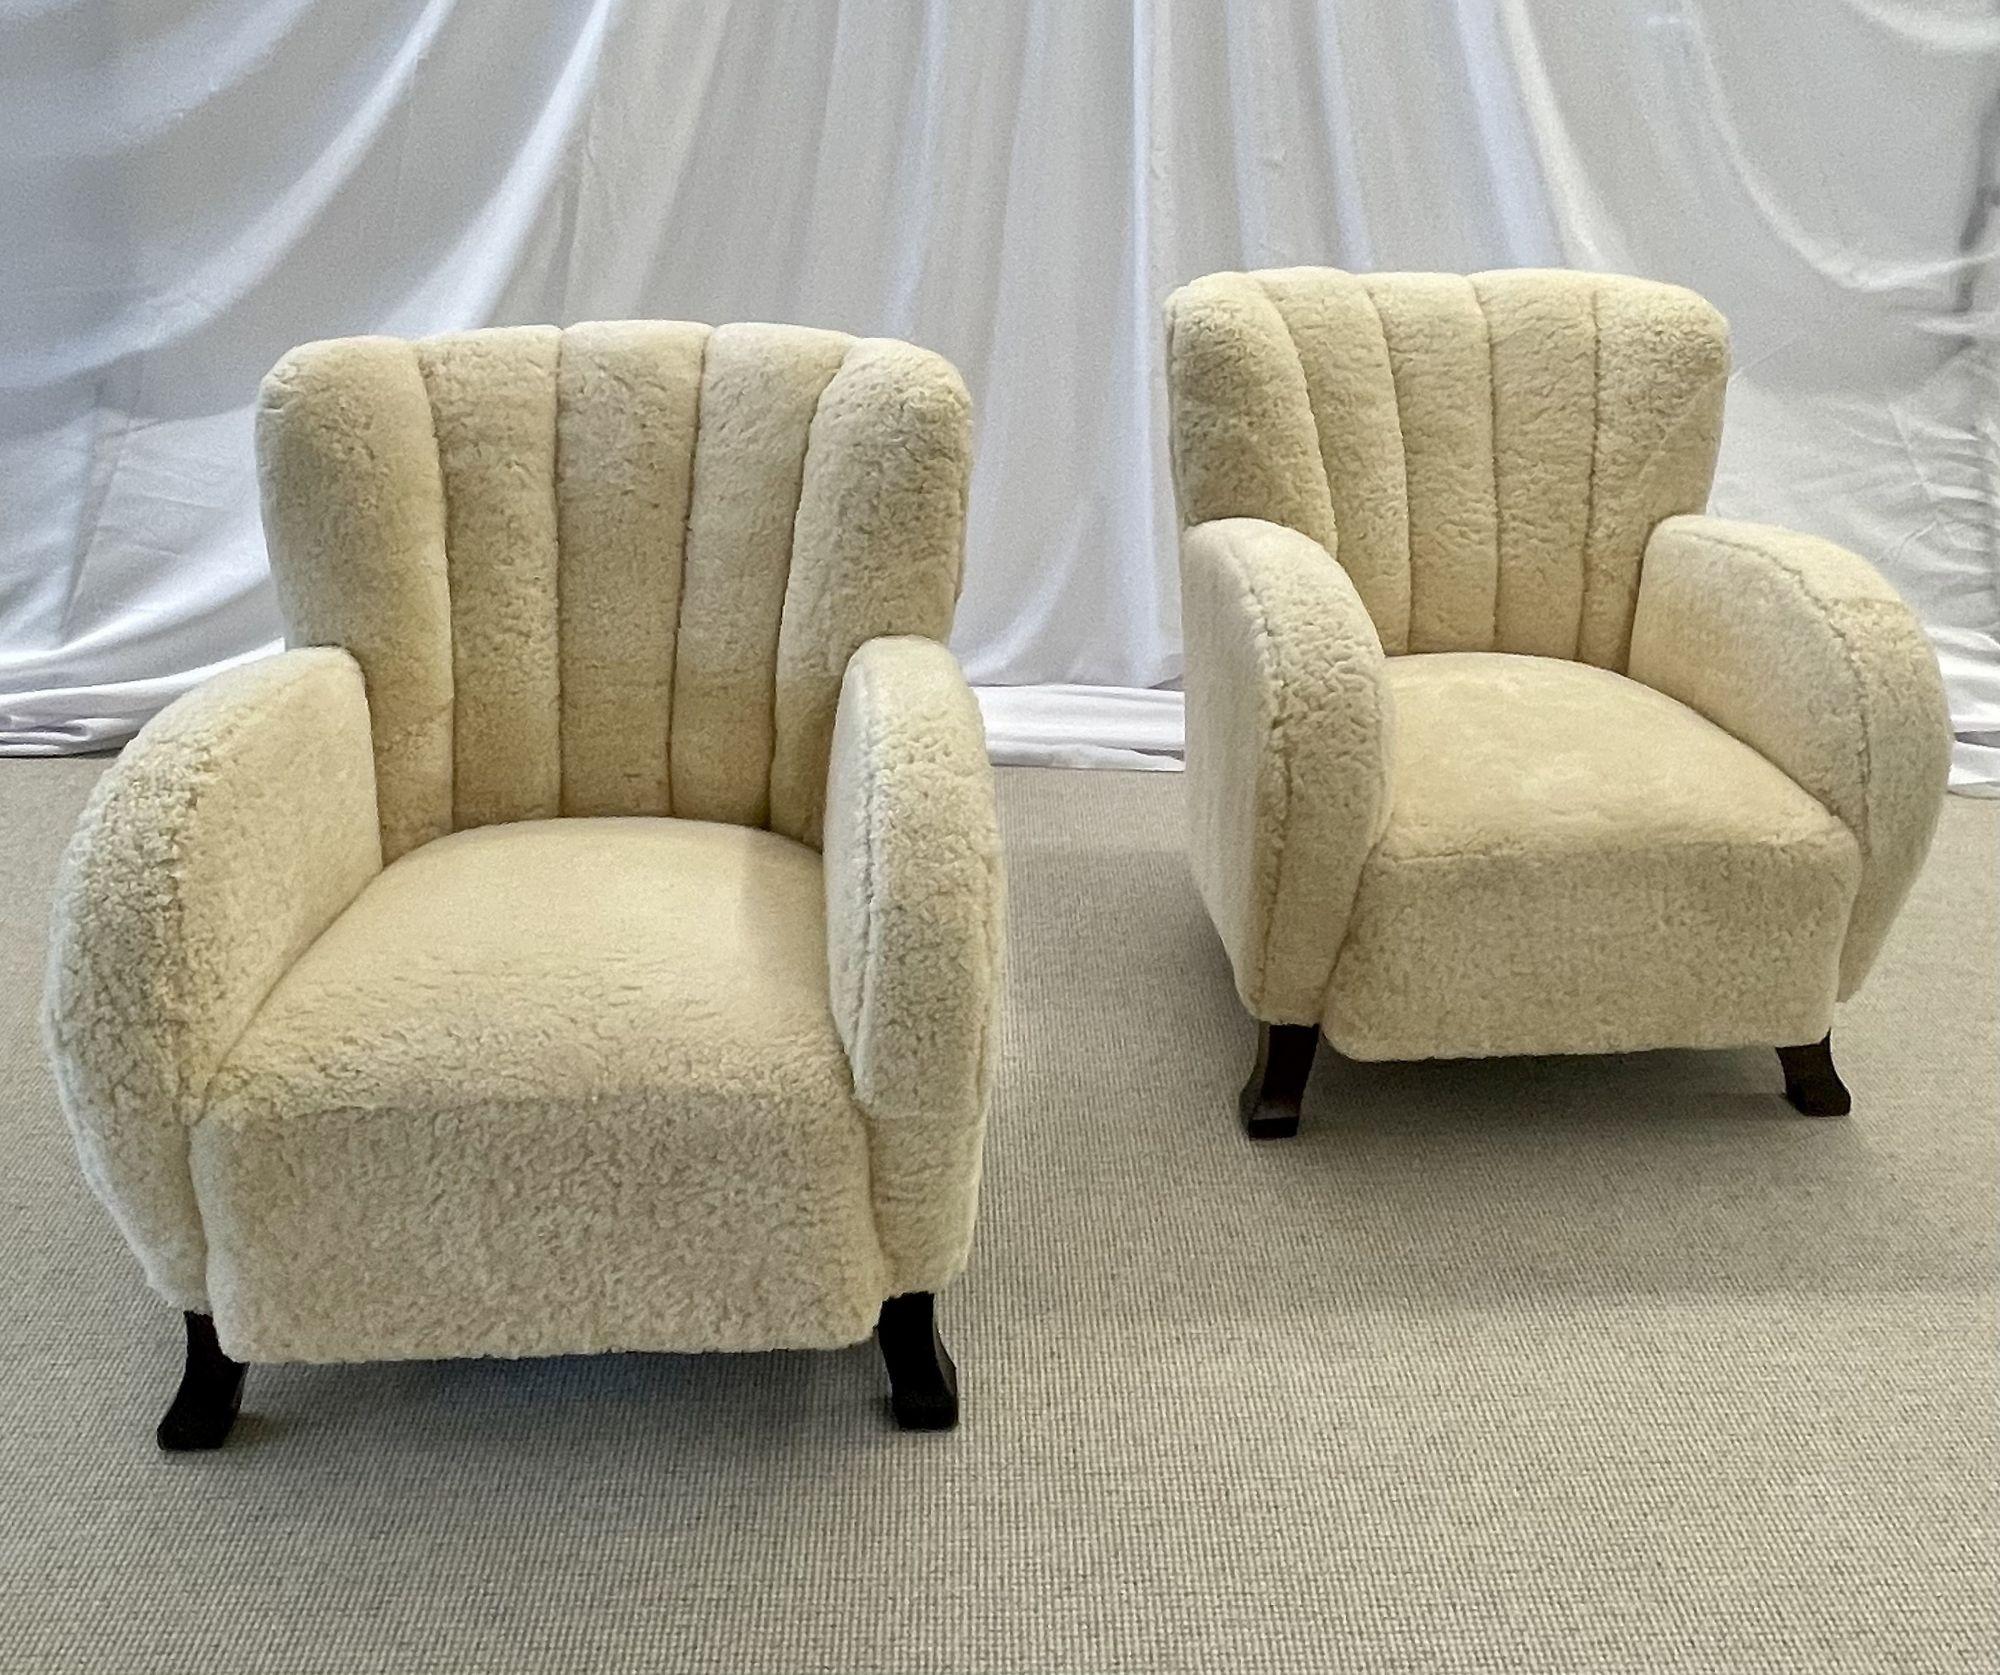 20th Century Swedish Mid-Century Modern, Art Deco Lounge Chairs, Sheepskin, Wood, 1930s For Sale